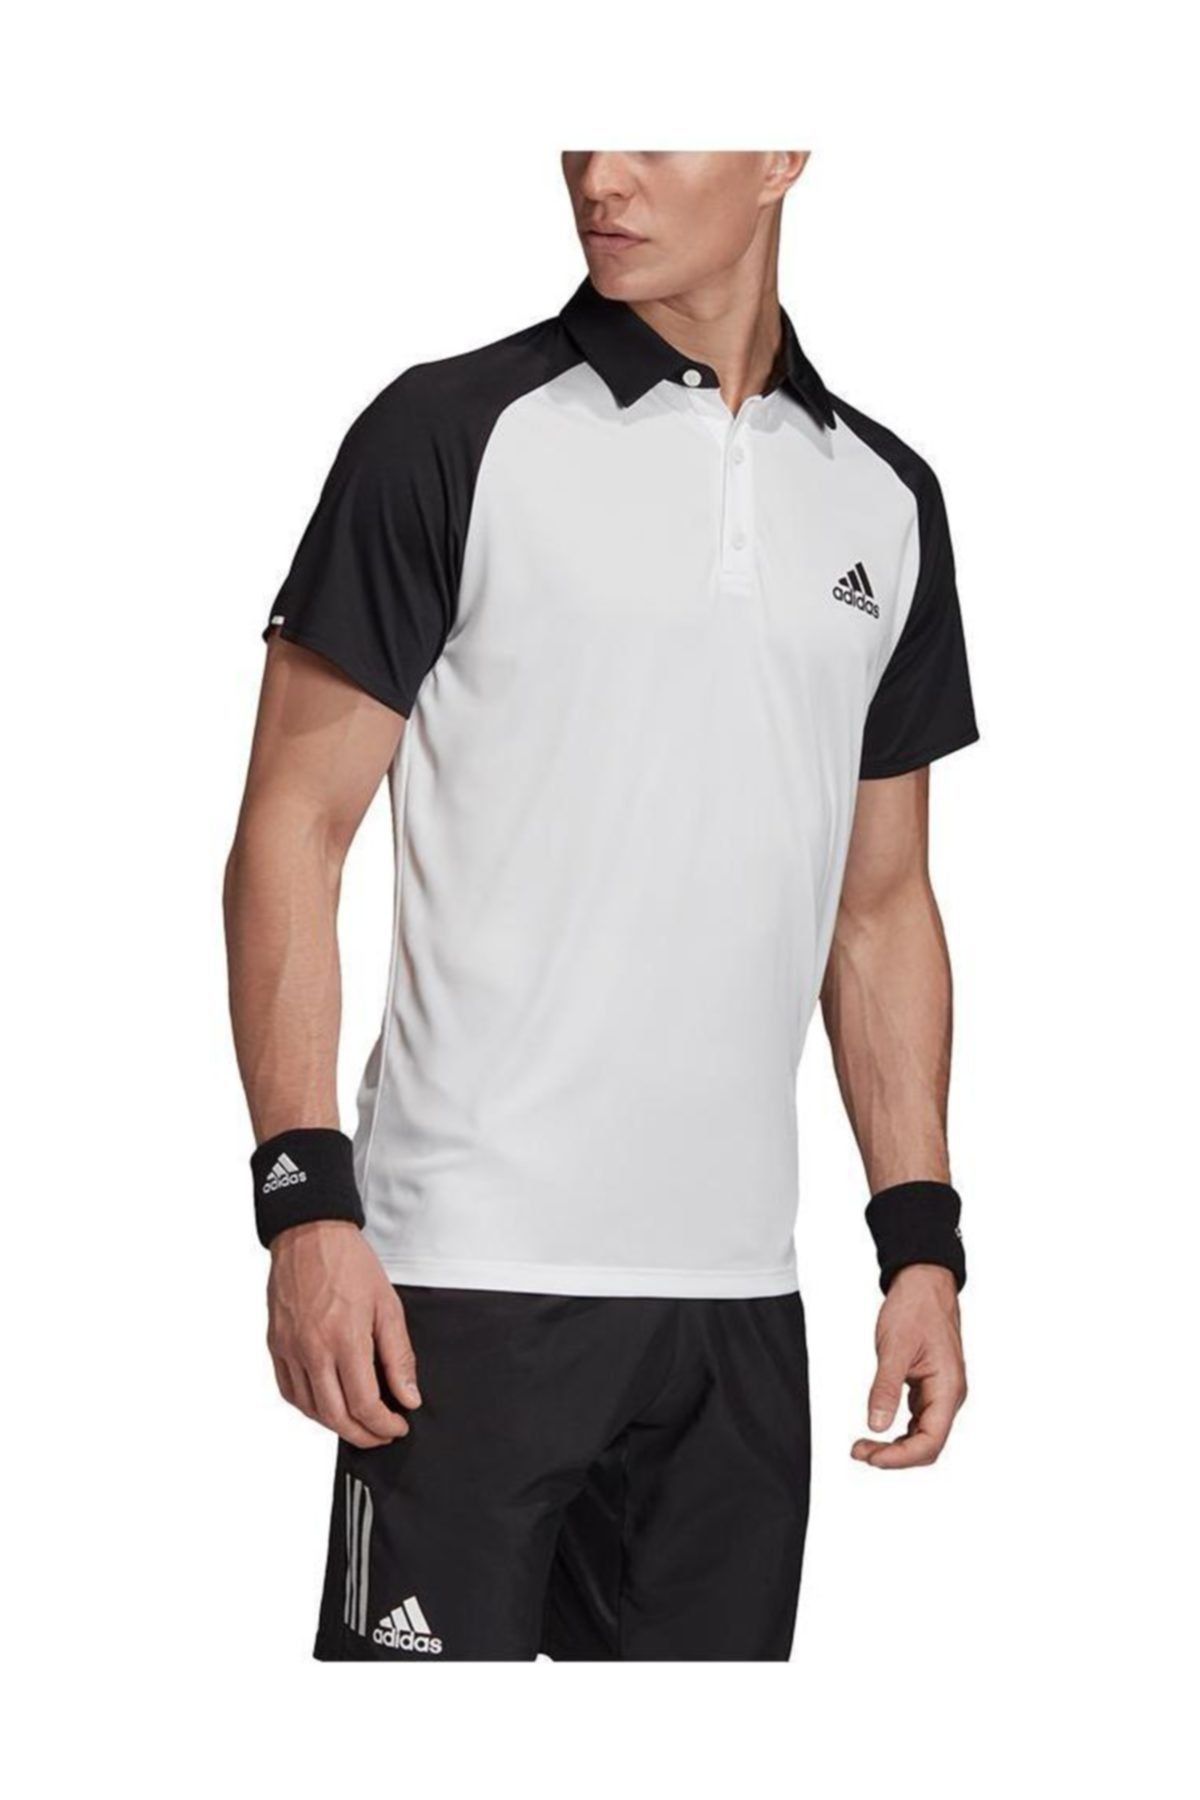 adidas CLUB C/B POLO Beyaz Erkek Kısa Kol T-Shirt 101069105